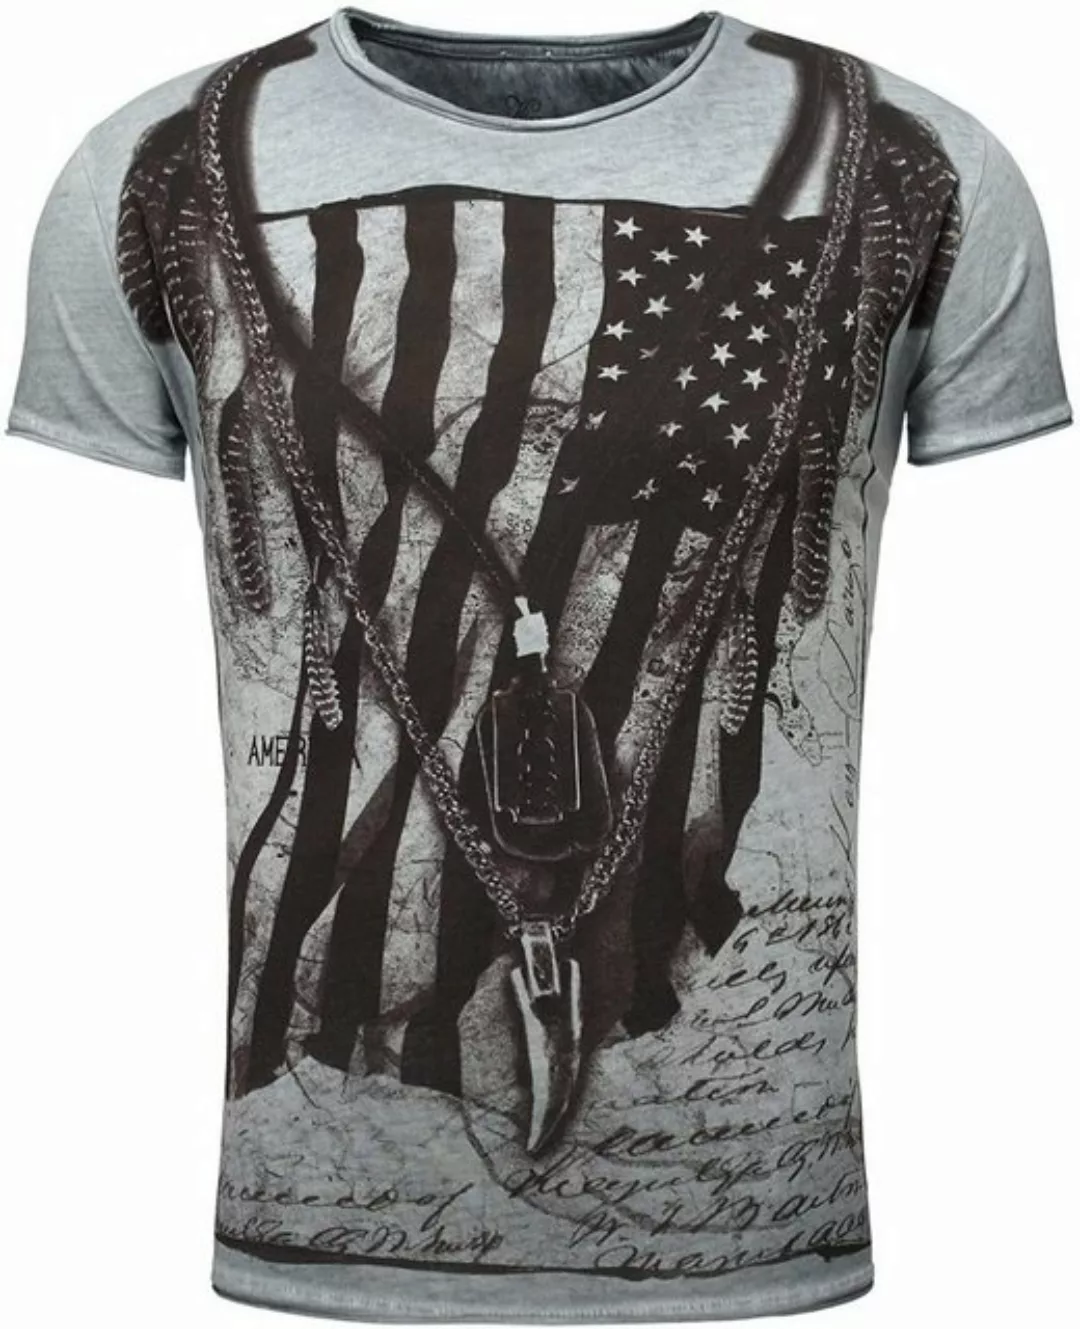 Key Largo T-Shirt T-Shirt RACERBLADE USA Amerika Fahne Print Motiv vintage günstig online kaufen